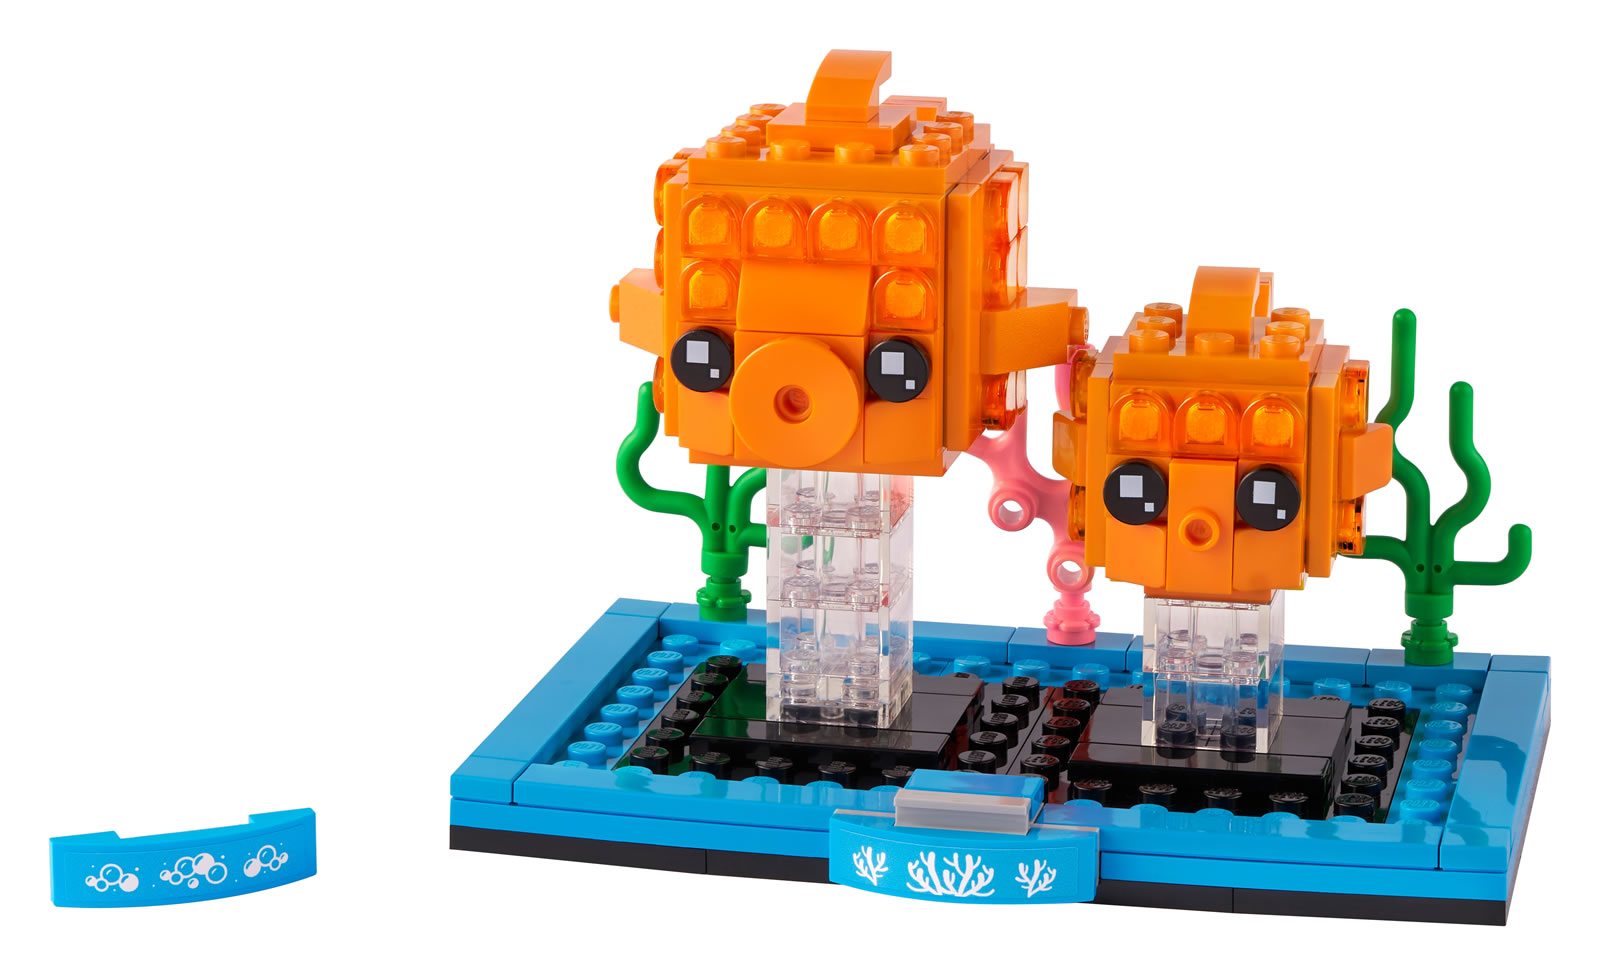 LEGO BrickHeadz Pets Goldfish en LEGO BrickHeadz Pets Budgie zijn aangekondigd